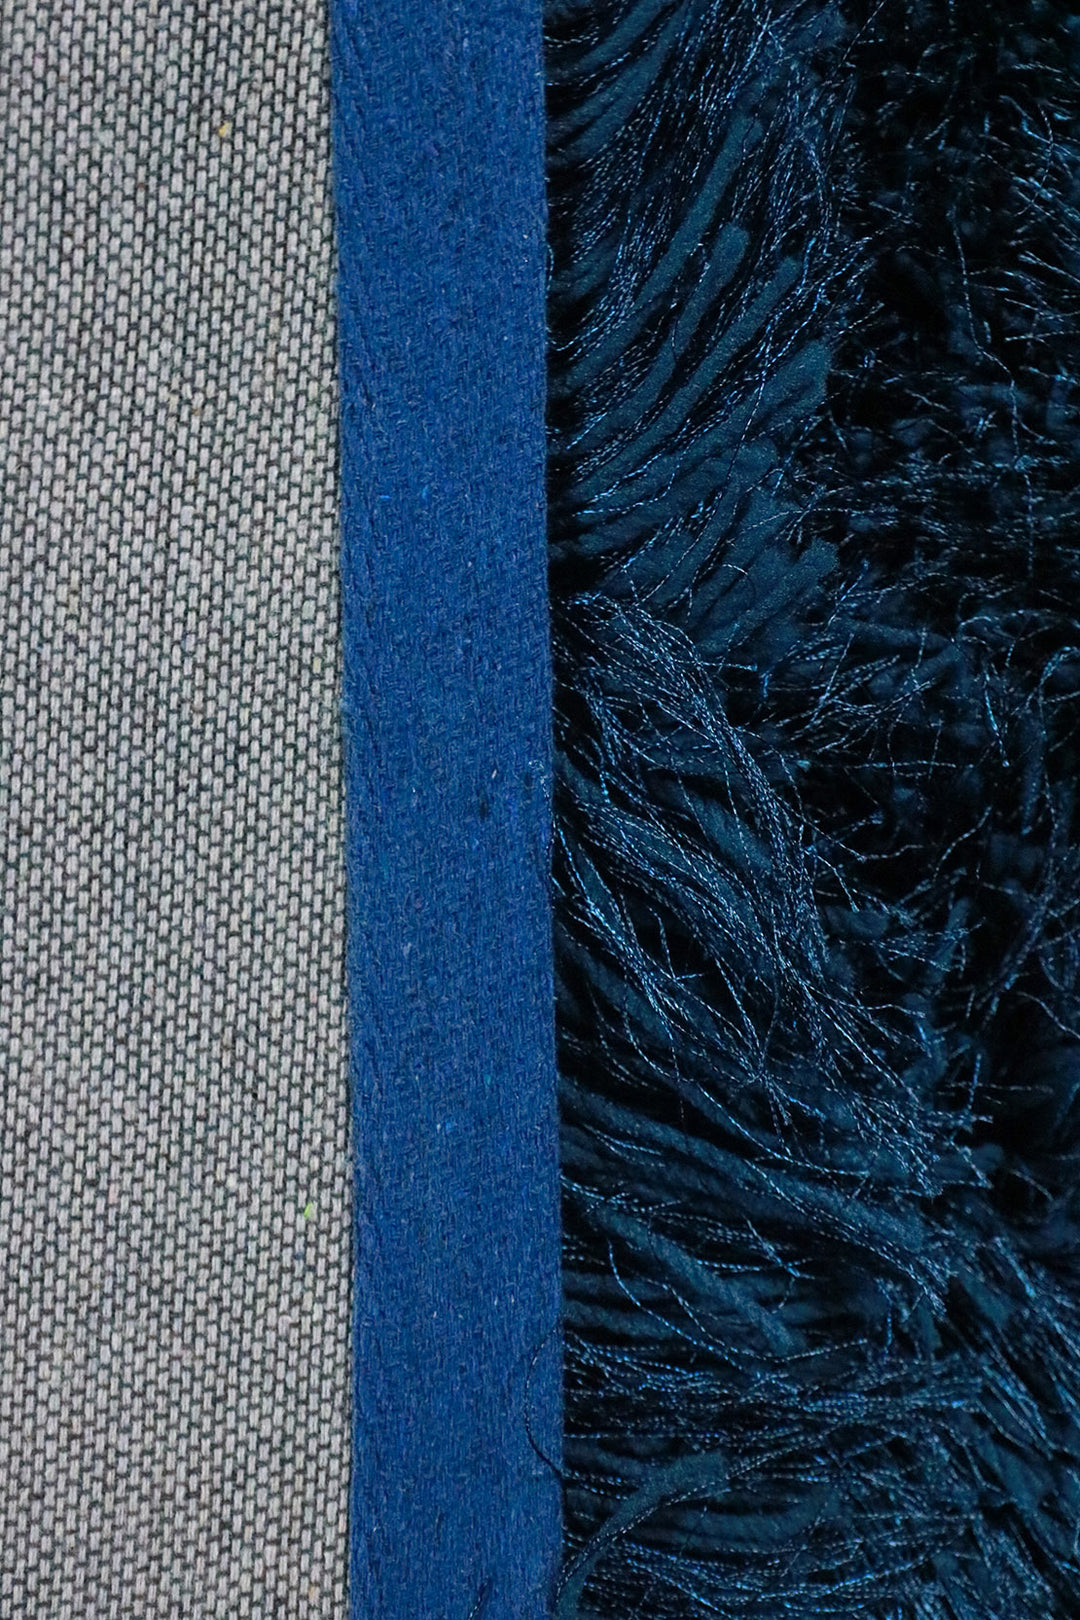 Turkish Plush and Soft  Heaven Shaggy Rug - Blue - 4.9 x 7.2 FT - Fluffy Furry Floor Decor Rug Heaven Shaggy